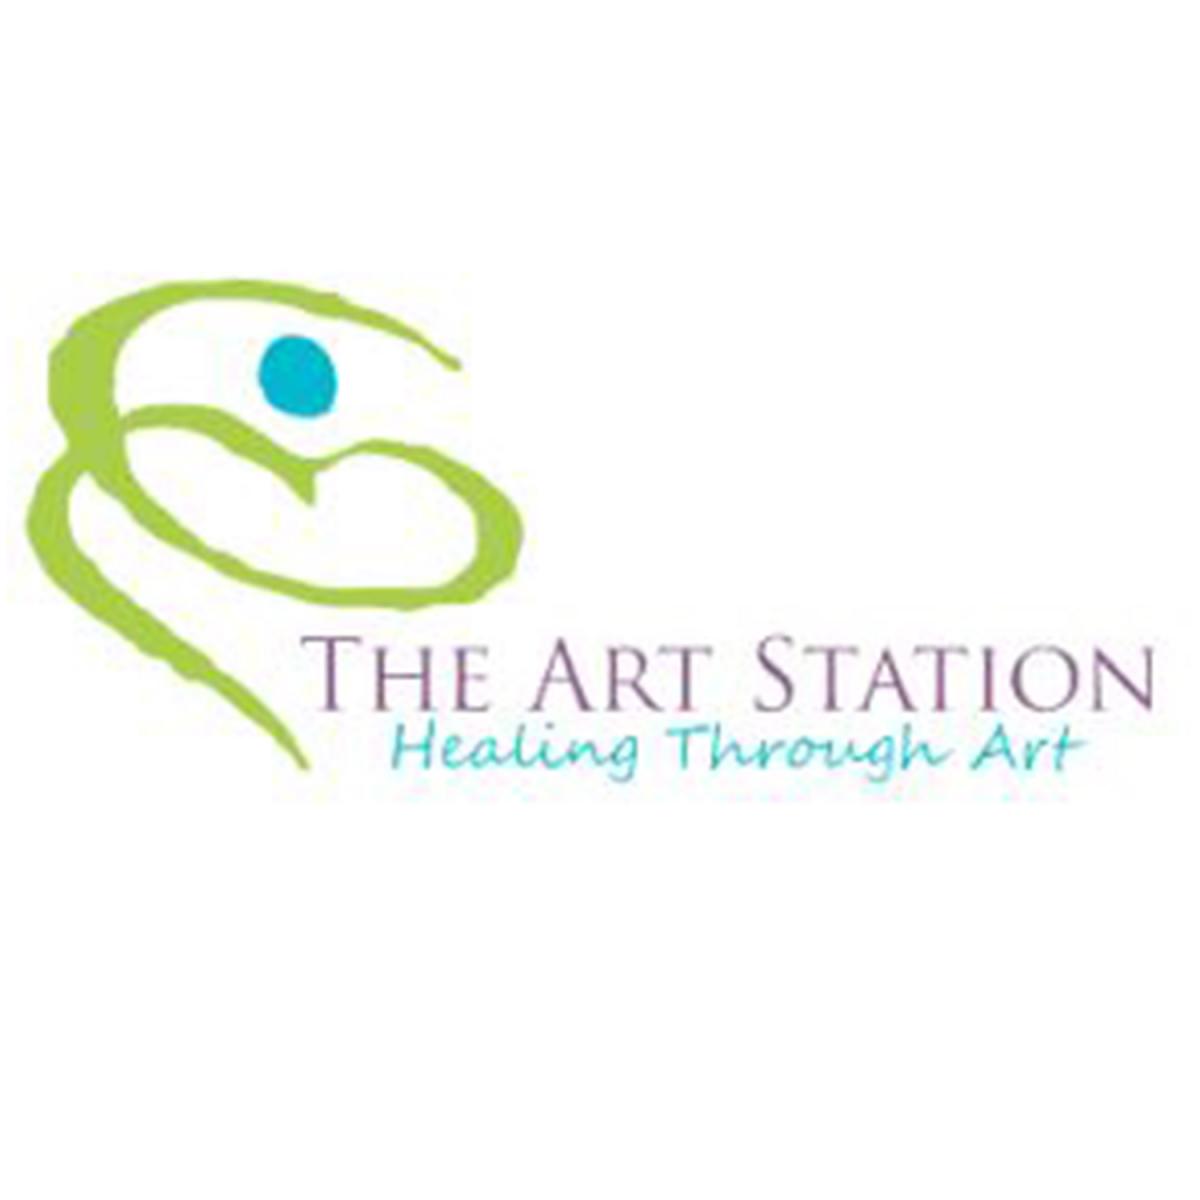 The Art Station